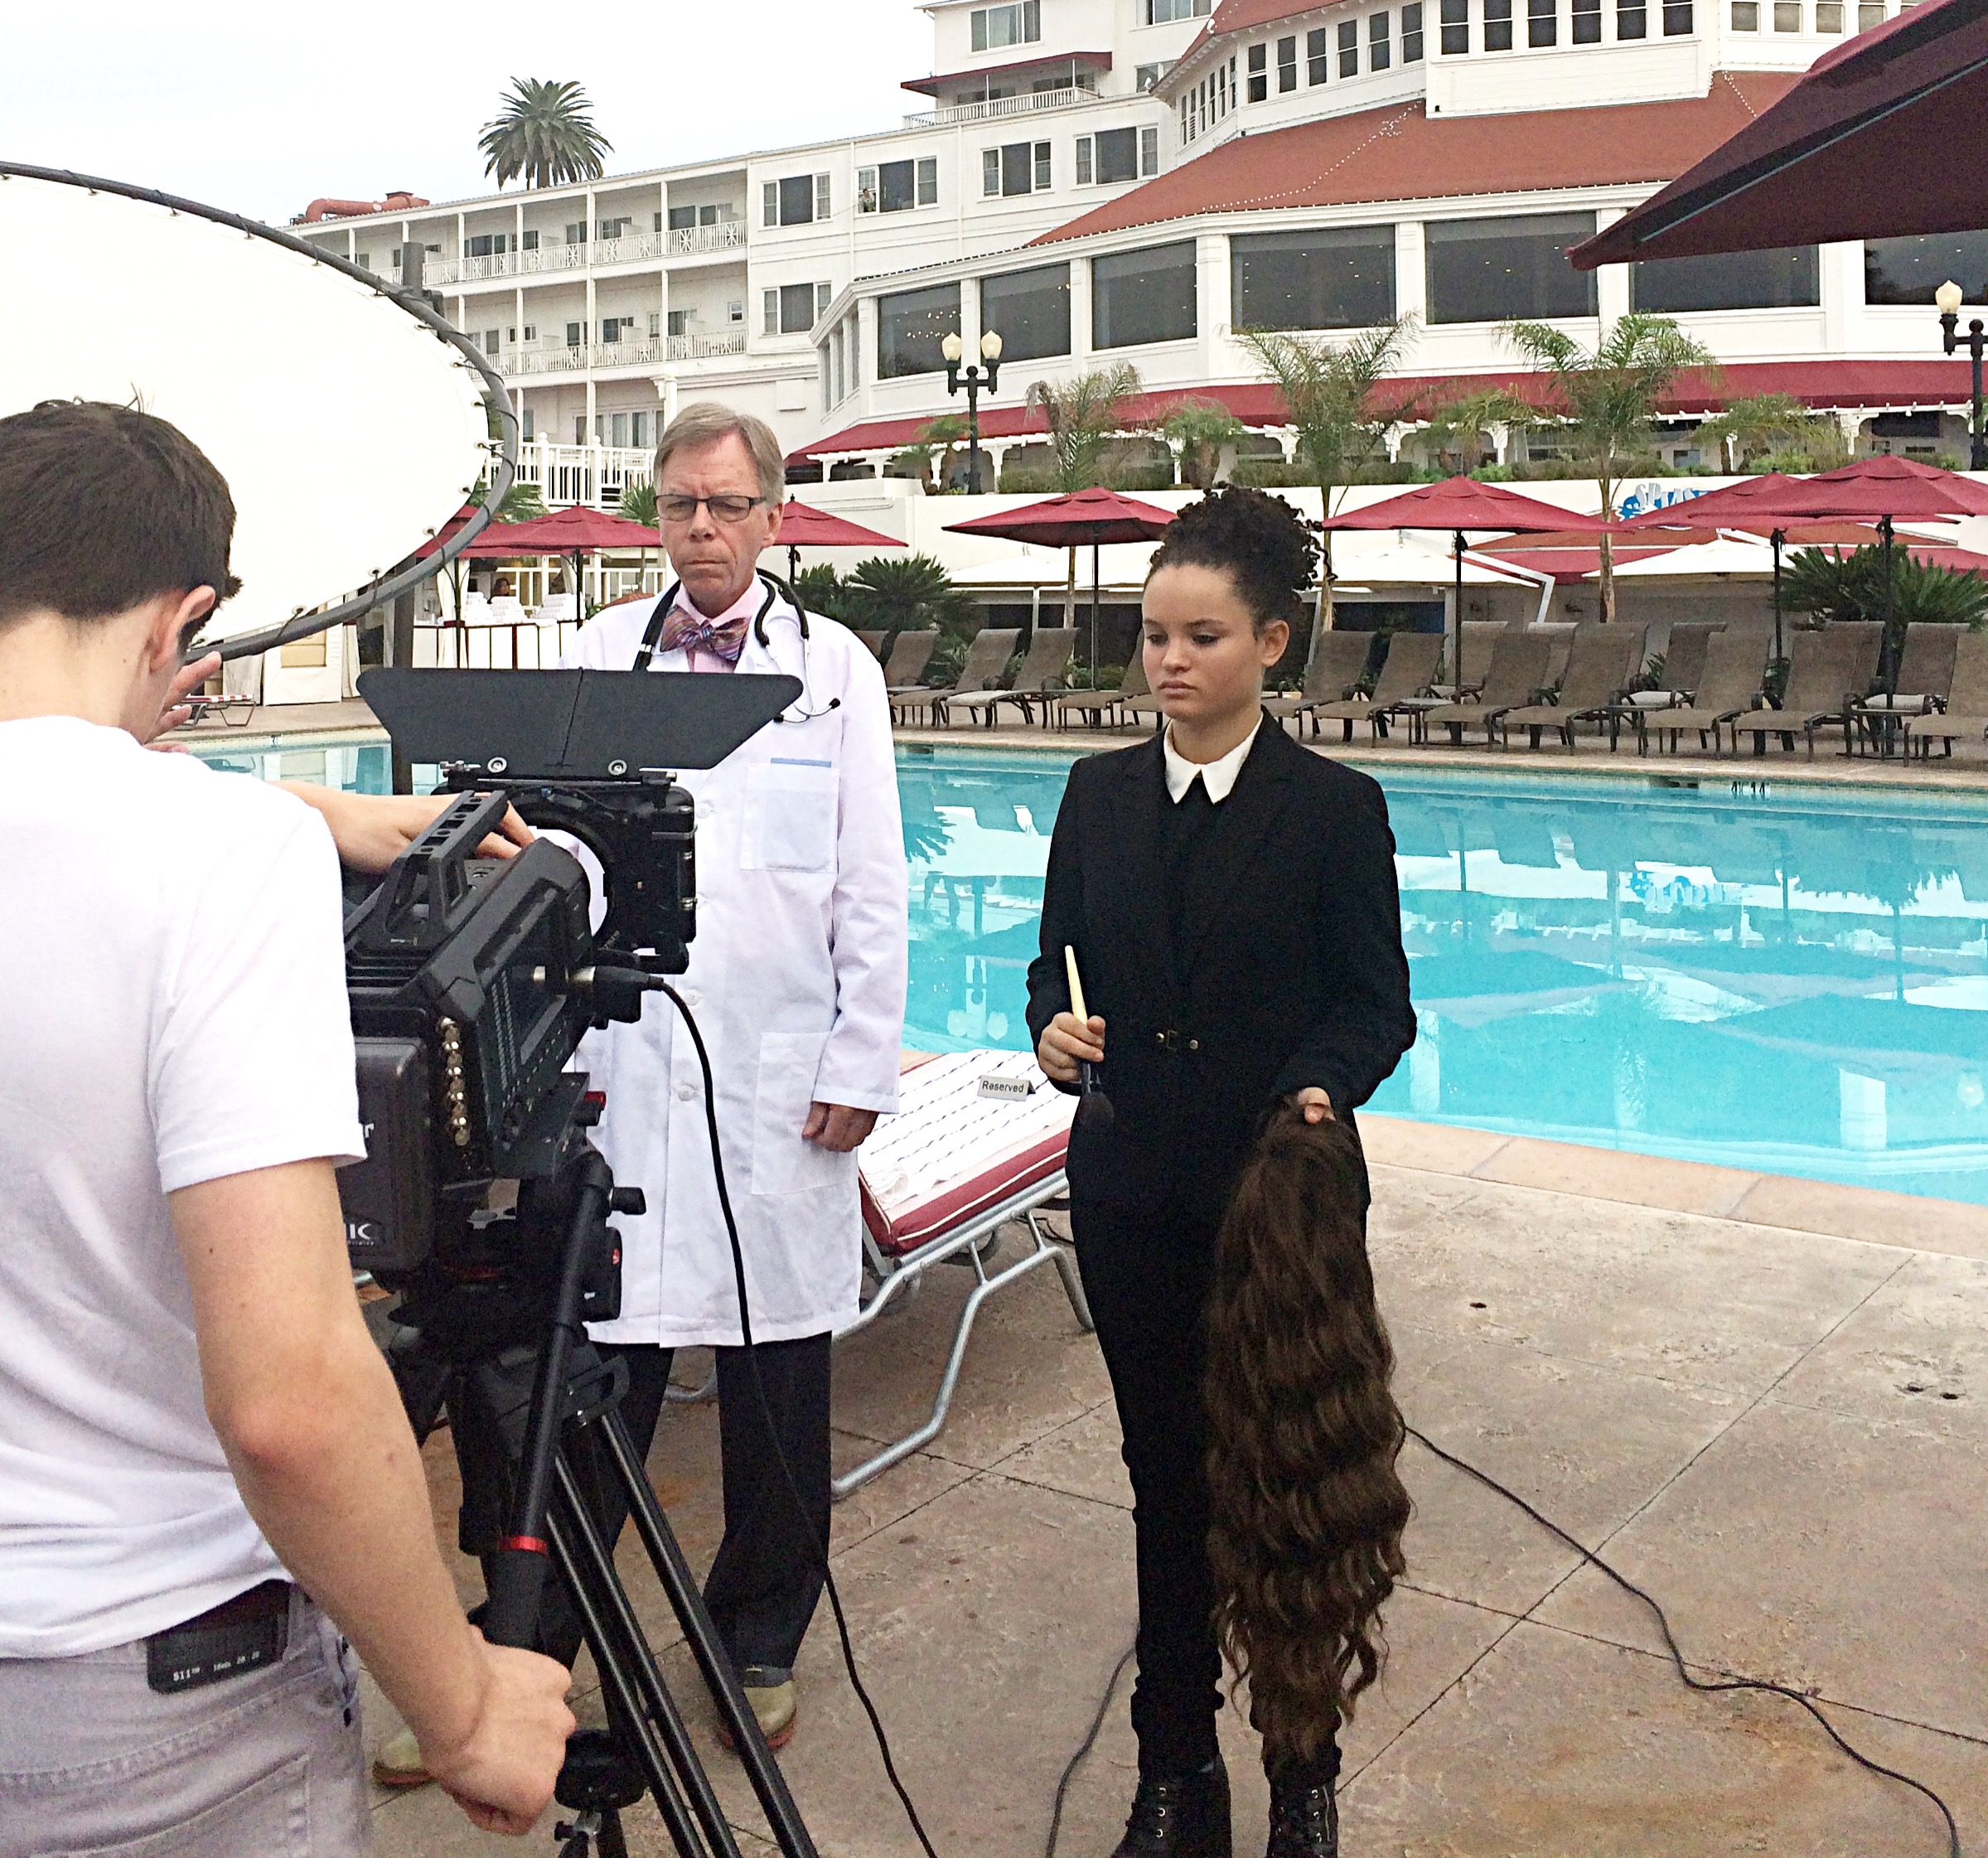 On set at Hotel Del Coronado while filming DayDream Hotel.